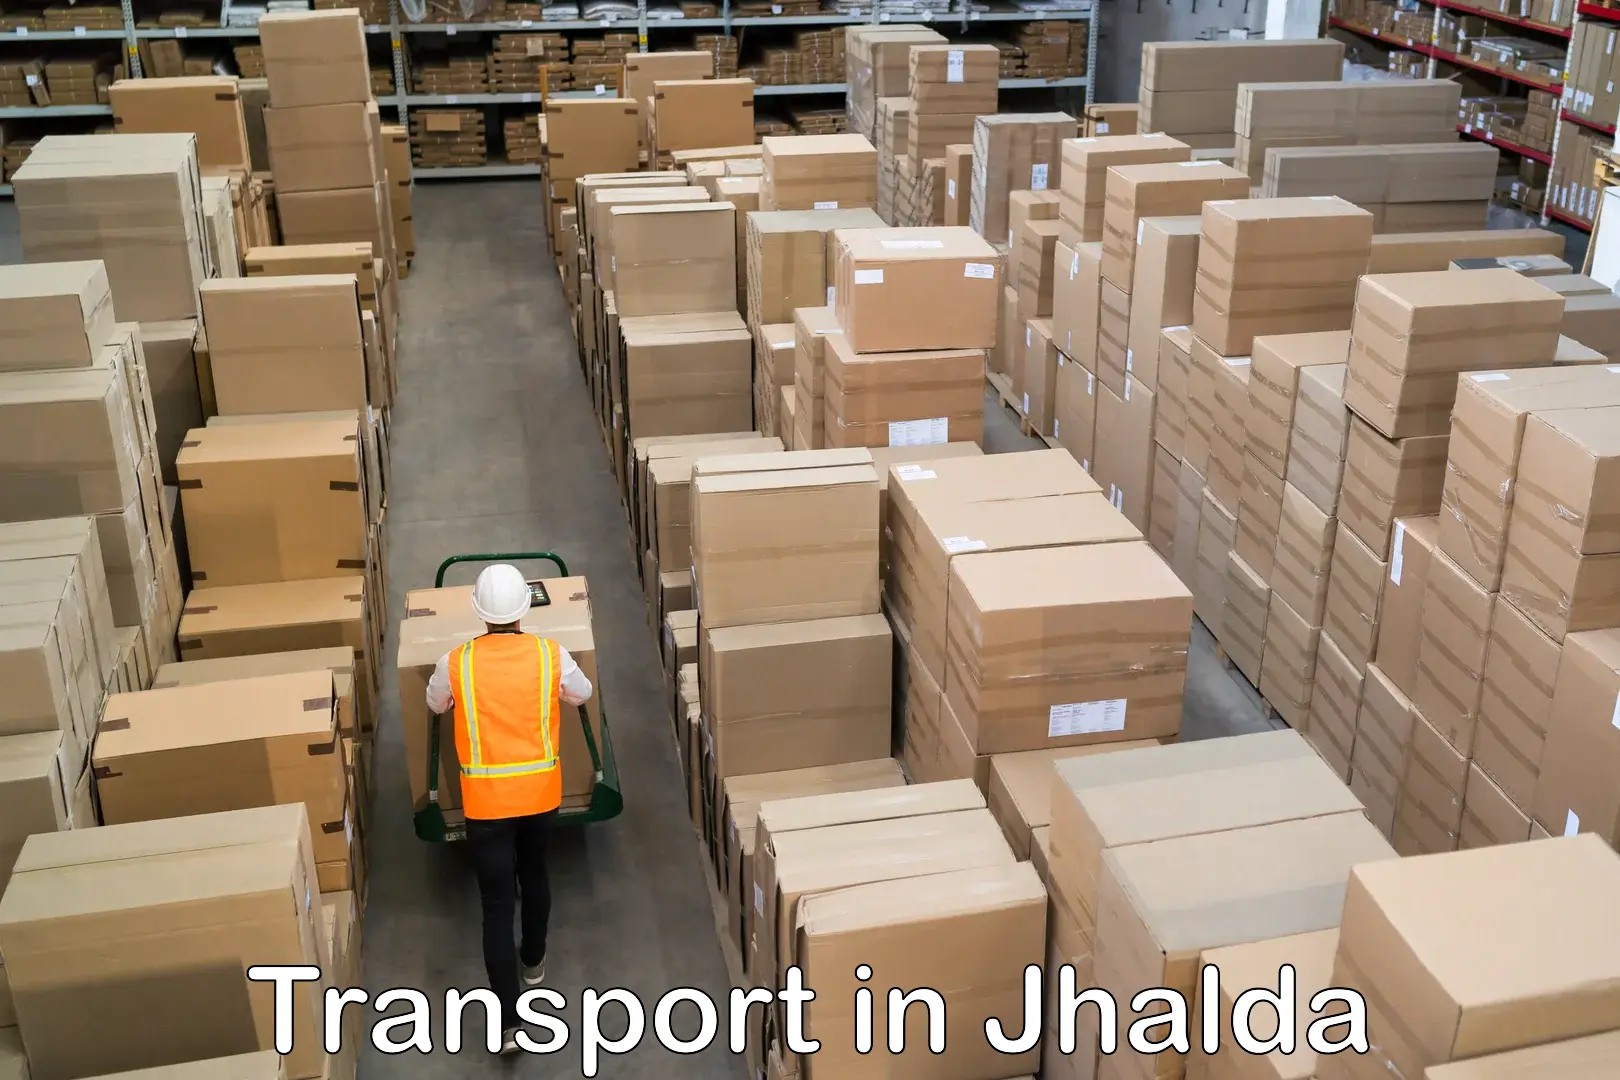 Intercity transport in Jhalda